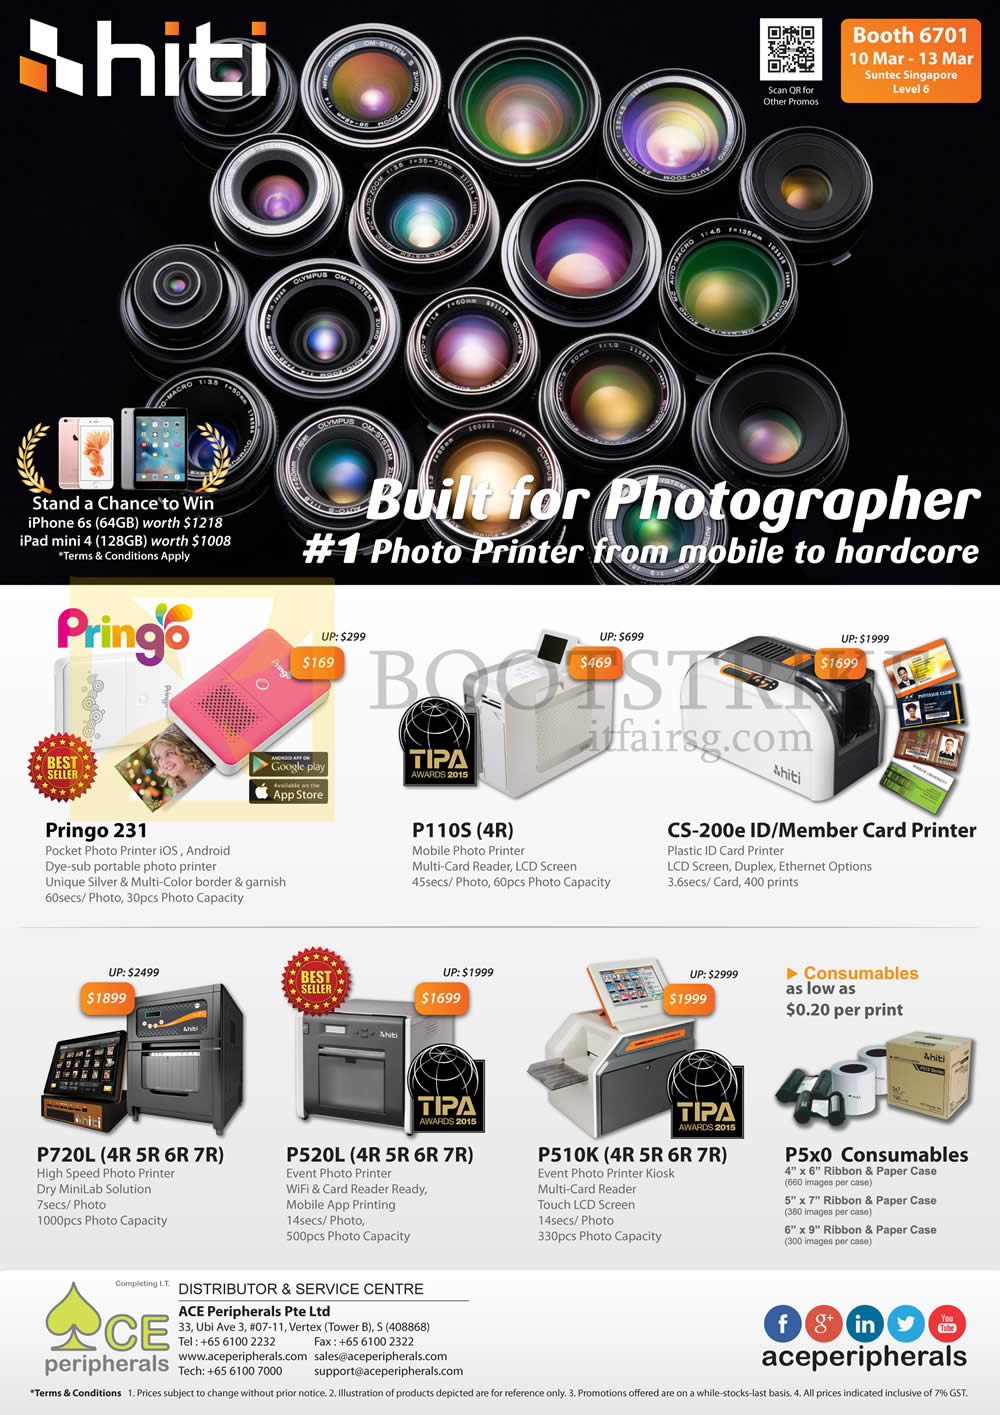 IT SHOW 2016 price list image brochure of Ace Peripherals Photo Printers HiTi Pringo Pocket P110S, S420i, P720L, P520L, P510K, CS 200e